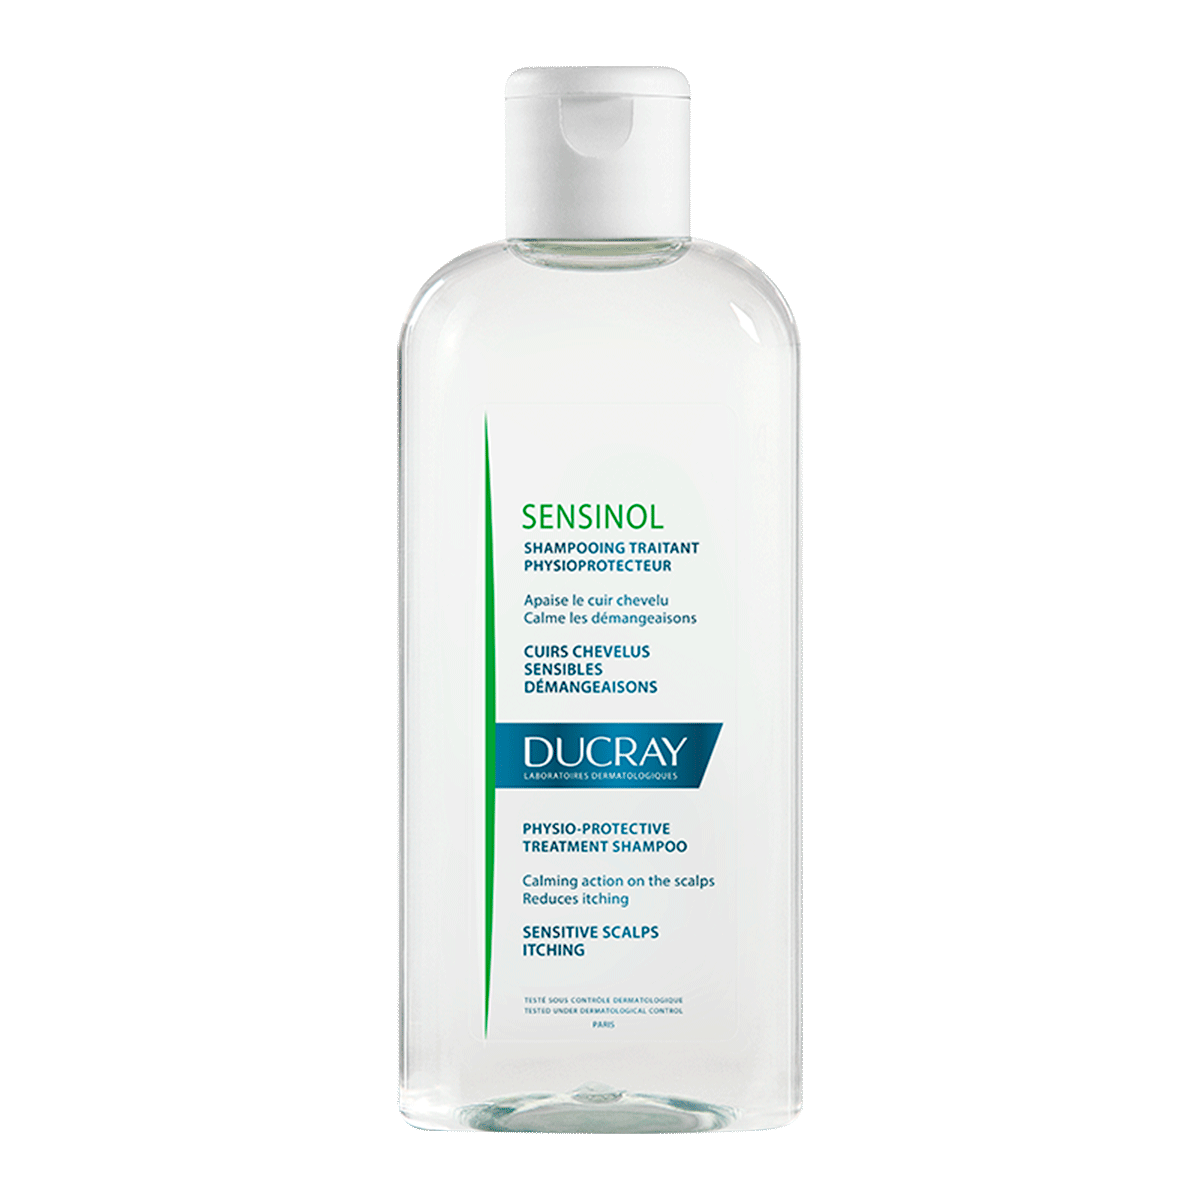 Ducray sensinol shampoo fisioprotector 200ml.